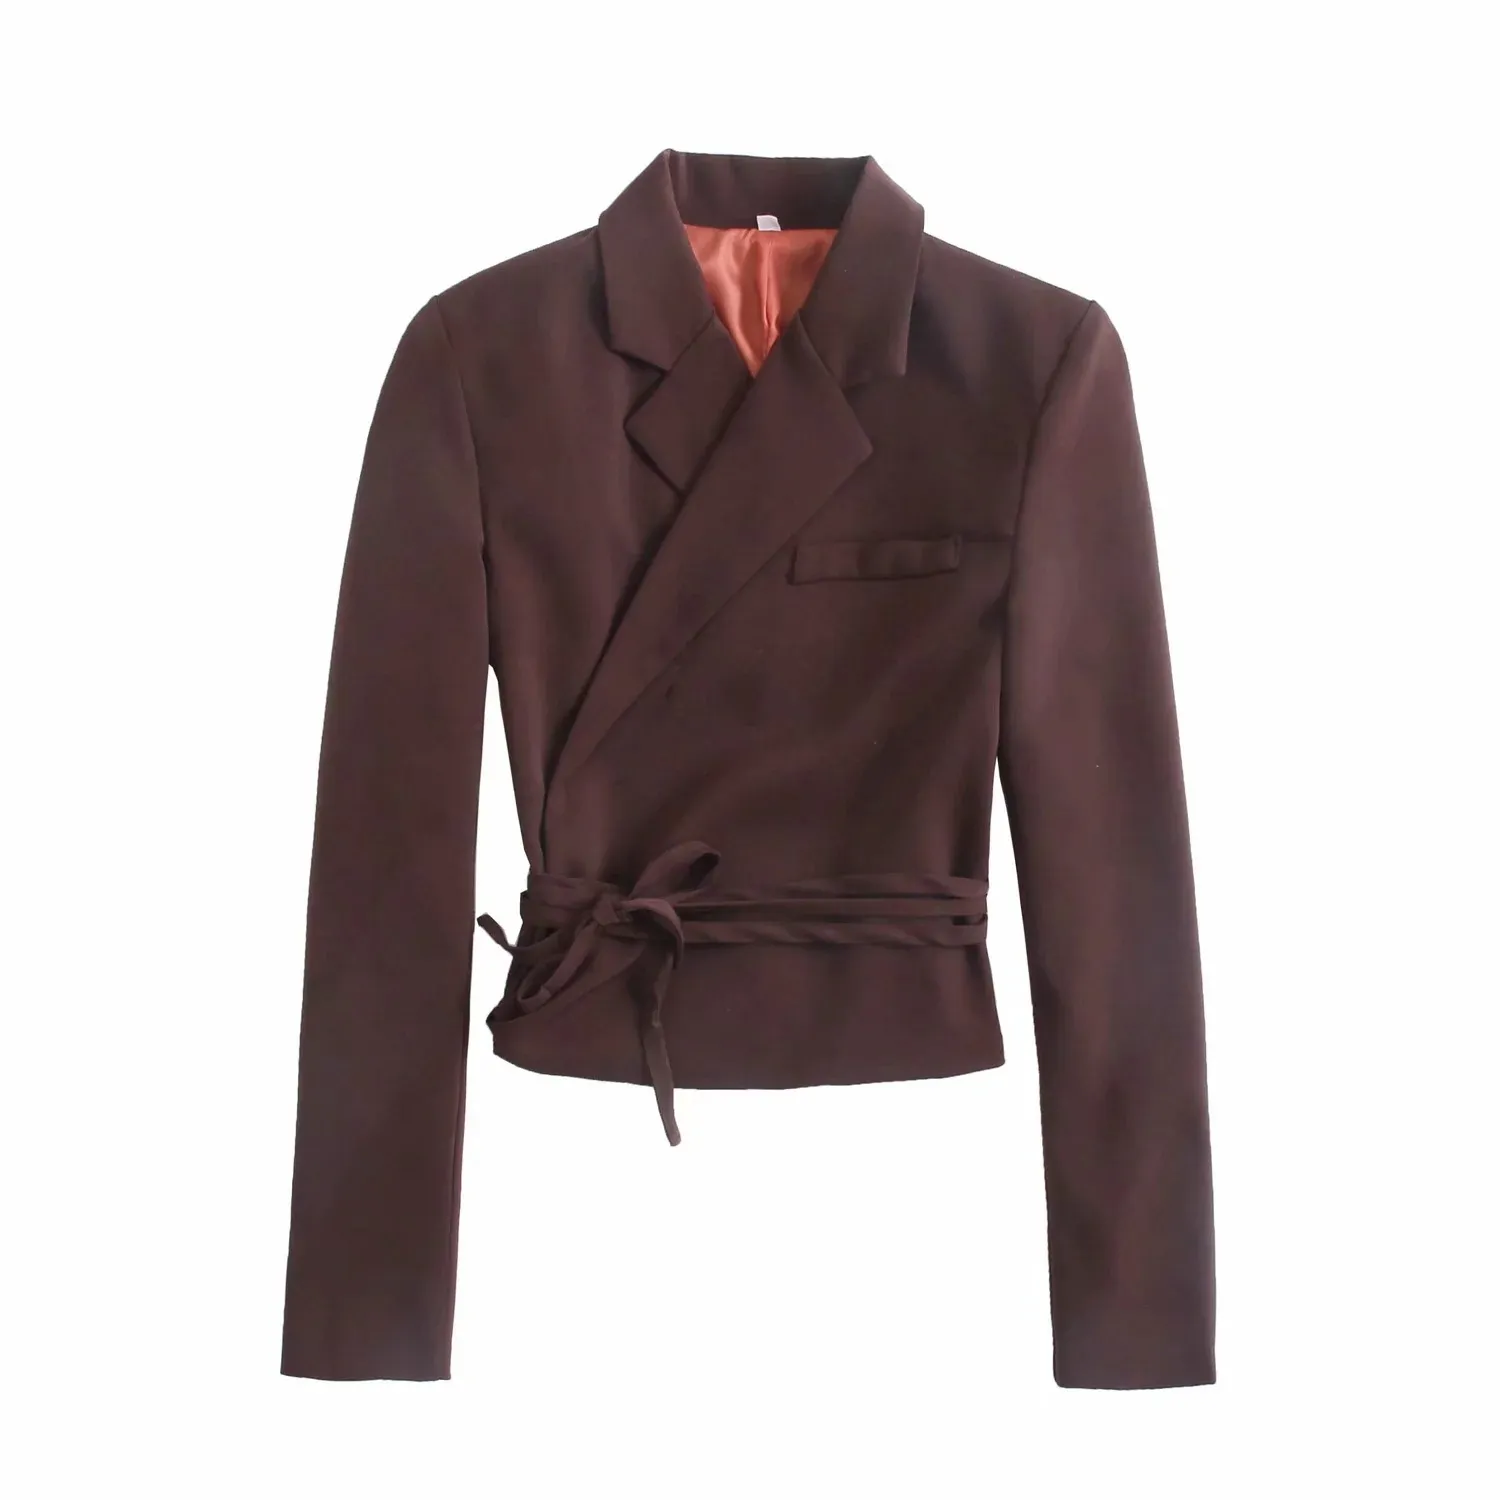 Dark Brown Women Blazer Jacket Design All-Match Lapel Casual Bow Tie Suit Jacket Coat Office Lady Chic Female Tops 210521